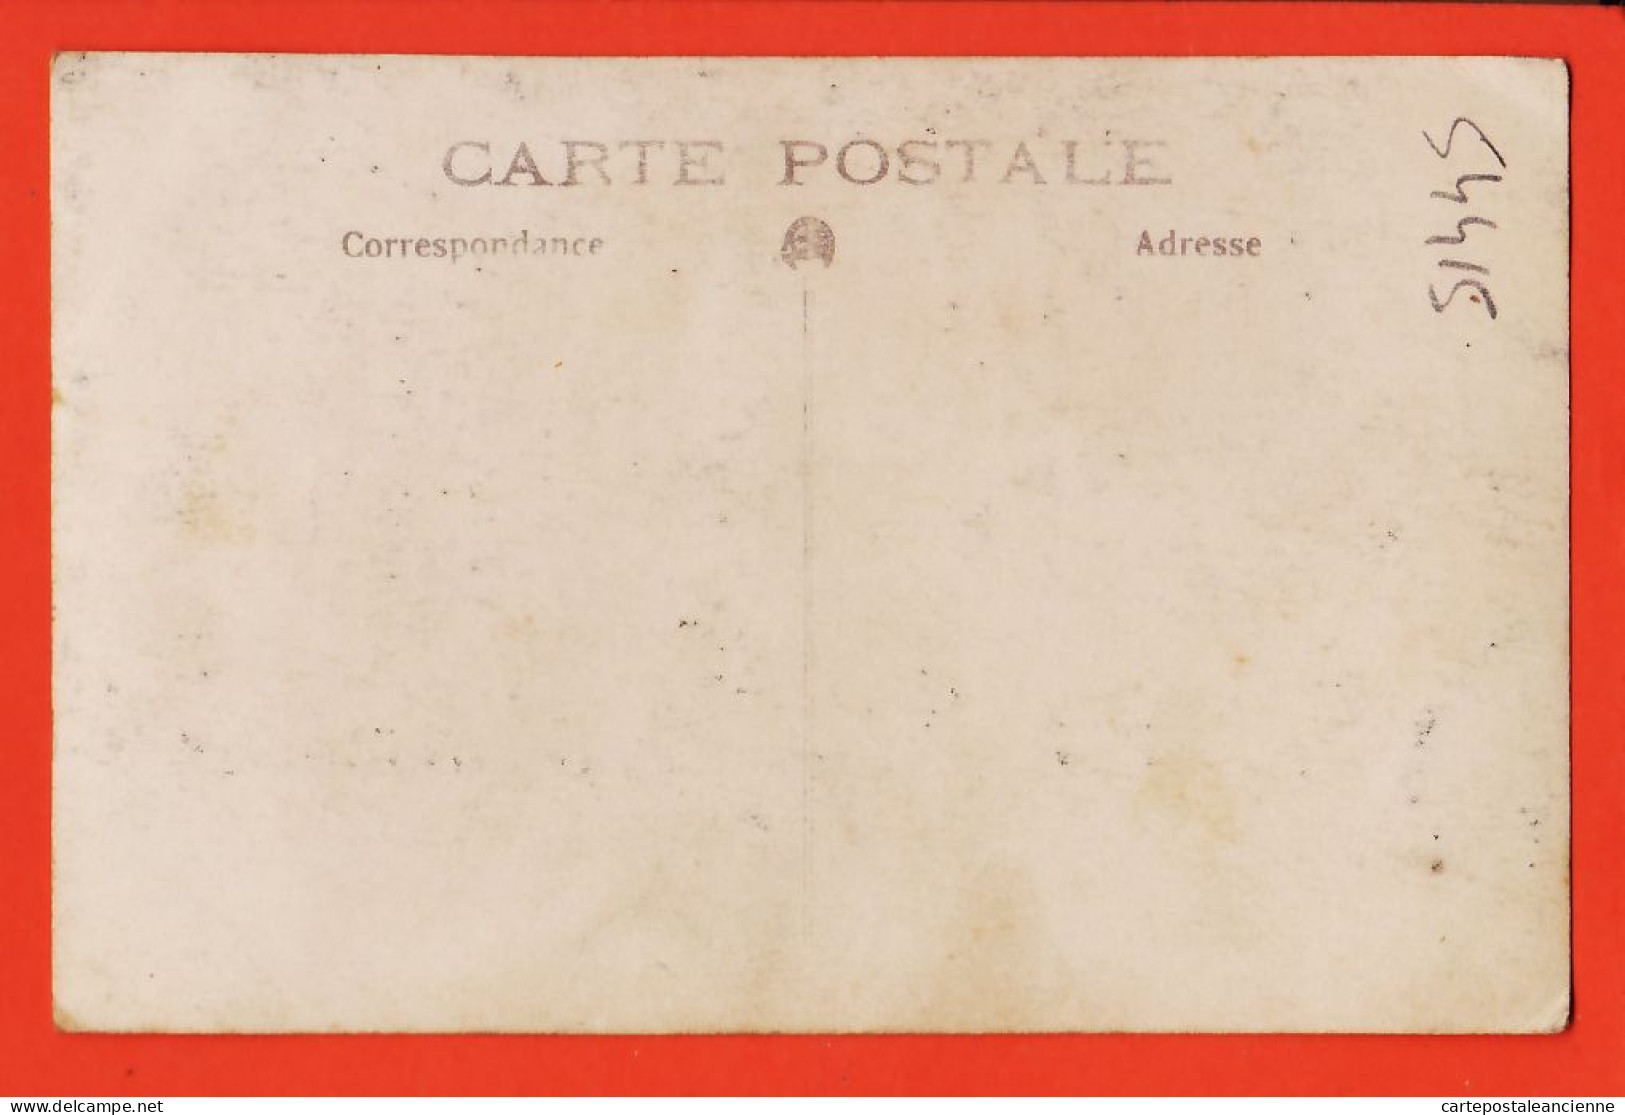 05504 ● Carte-Photo 1920s Jeune Femme Famille MAFFRE Et/ou BARTHE De CRUZY 34-Hérault - Photographie